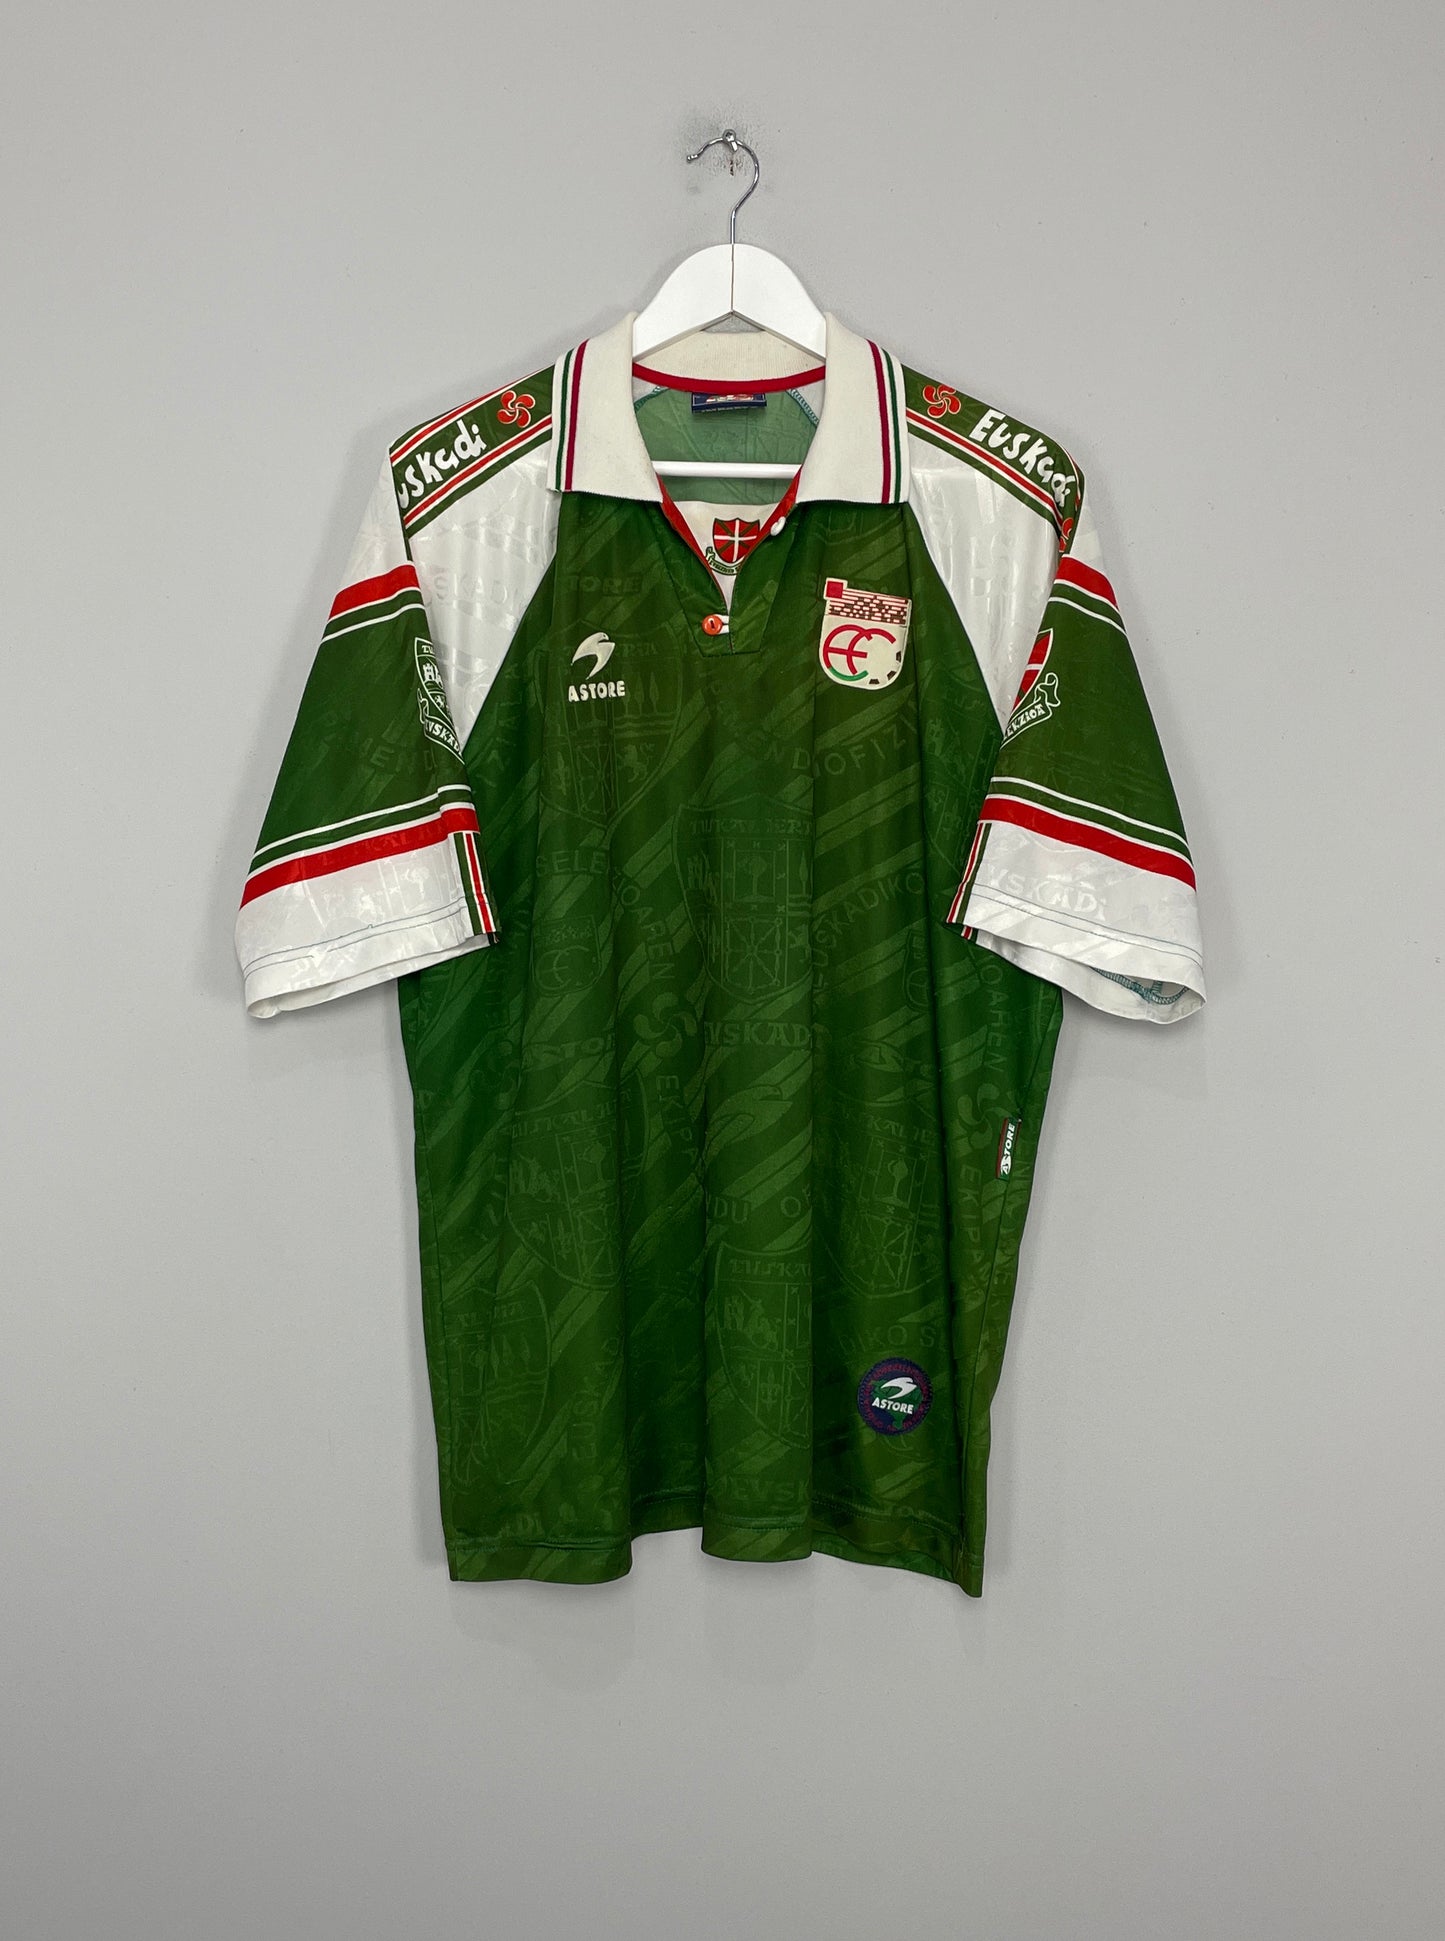 Image of the Euskadi shirt from the 1995/96 season